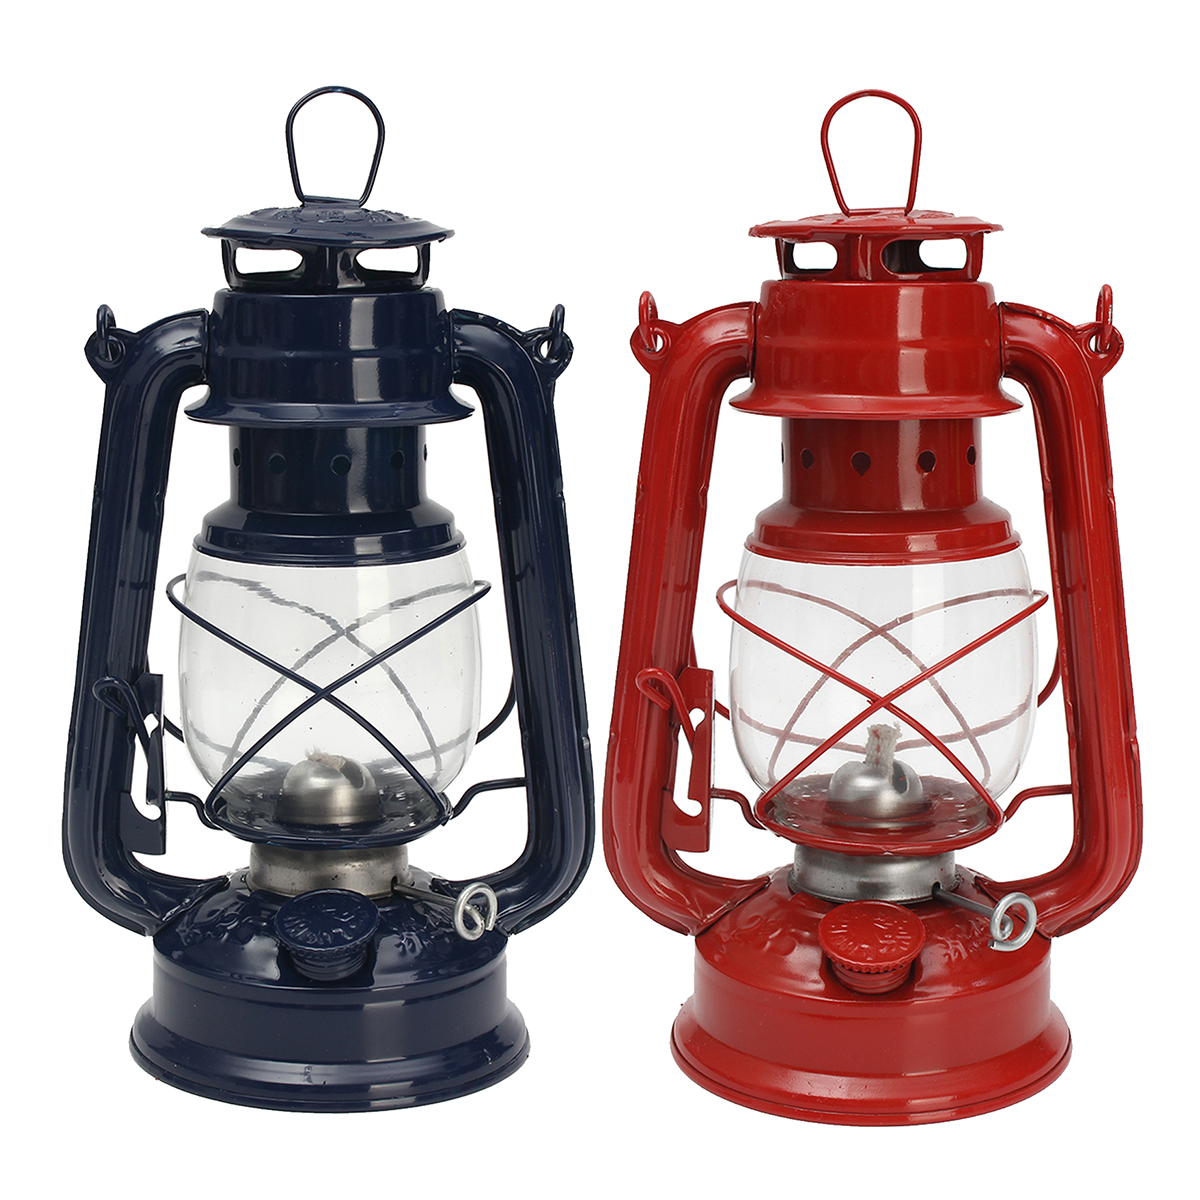 Vintage-Oil-Lamp-Lantern-Kerosene-Paraffin-Hurricane-Lamp-Light-Outdoor-Camping-1345072-2